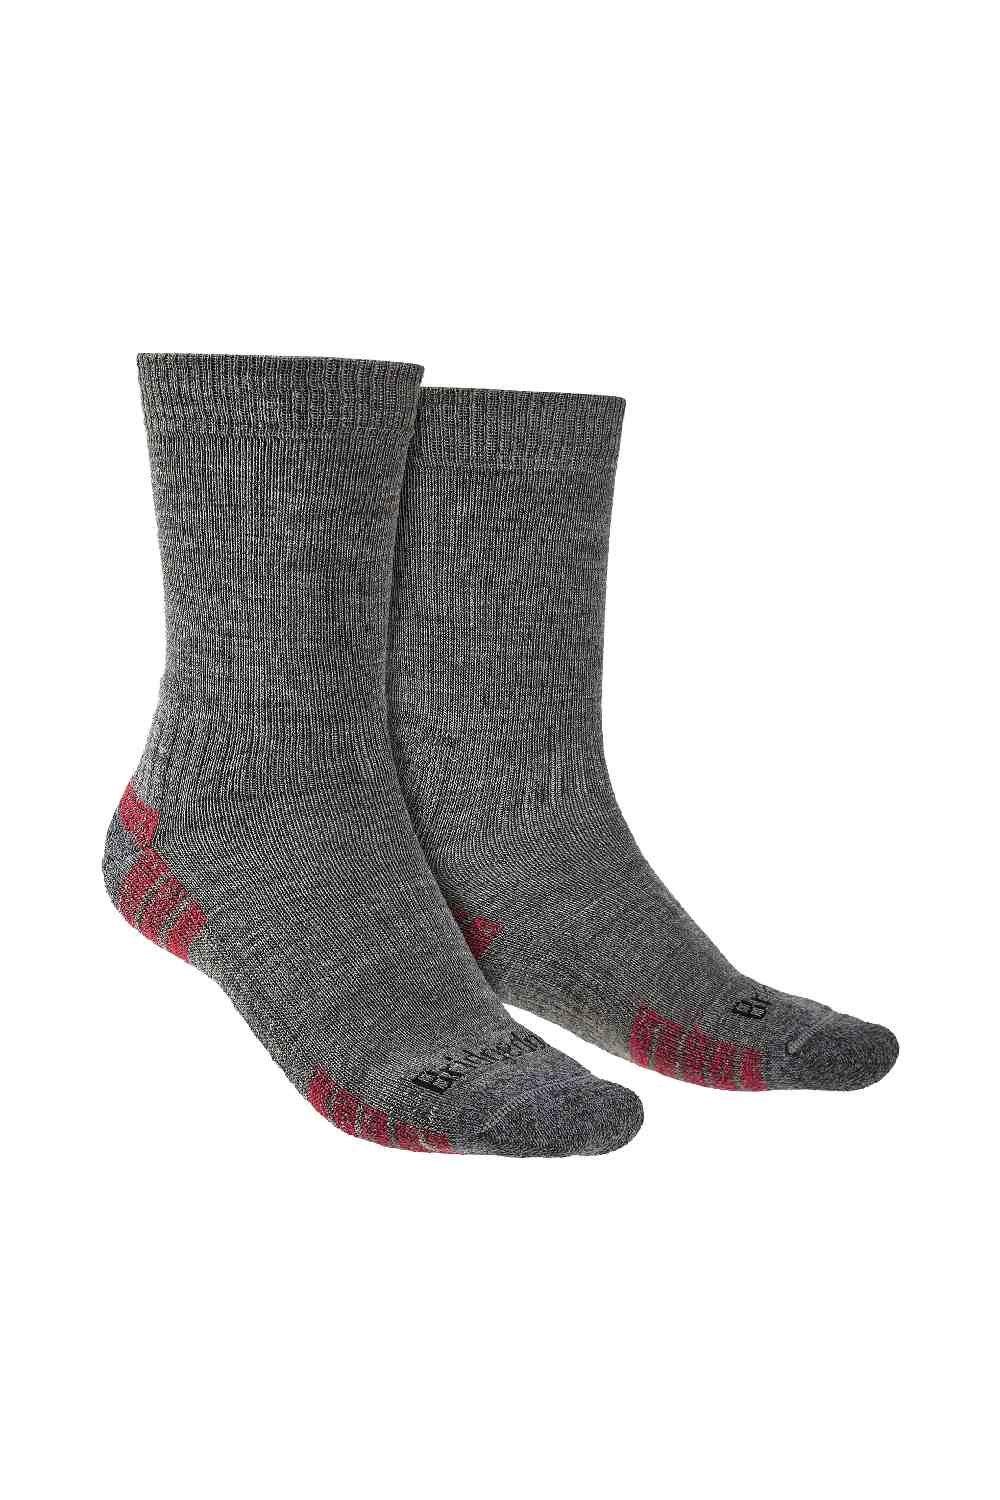 Hiking Lightweight Merino Wool Performance Boot Socks